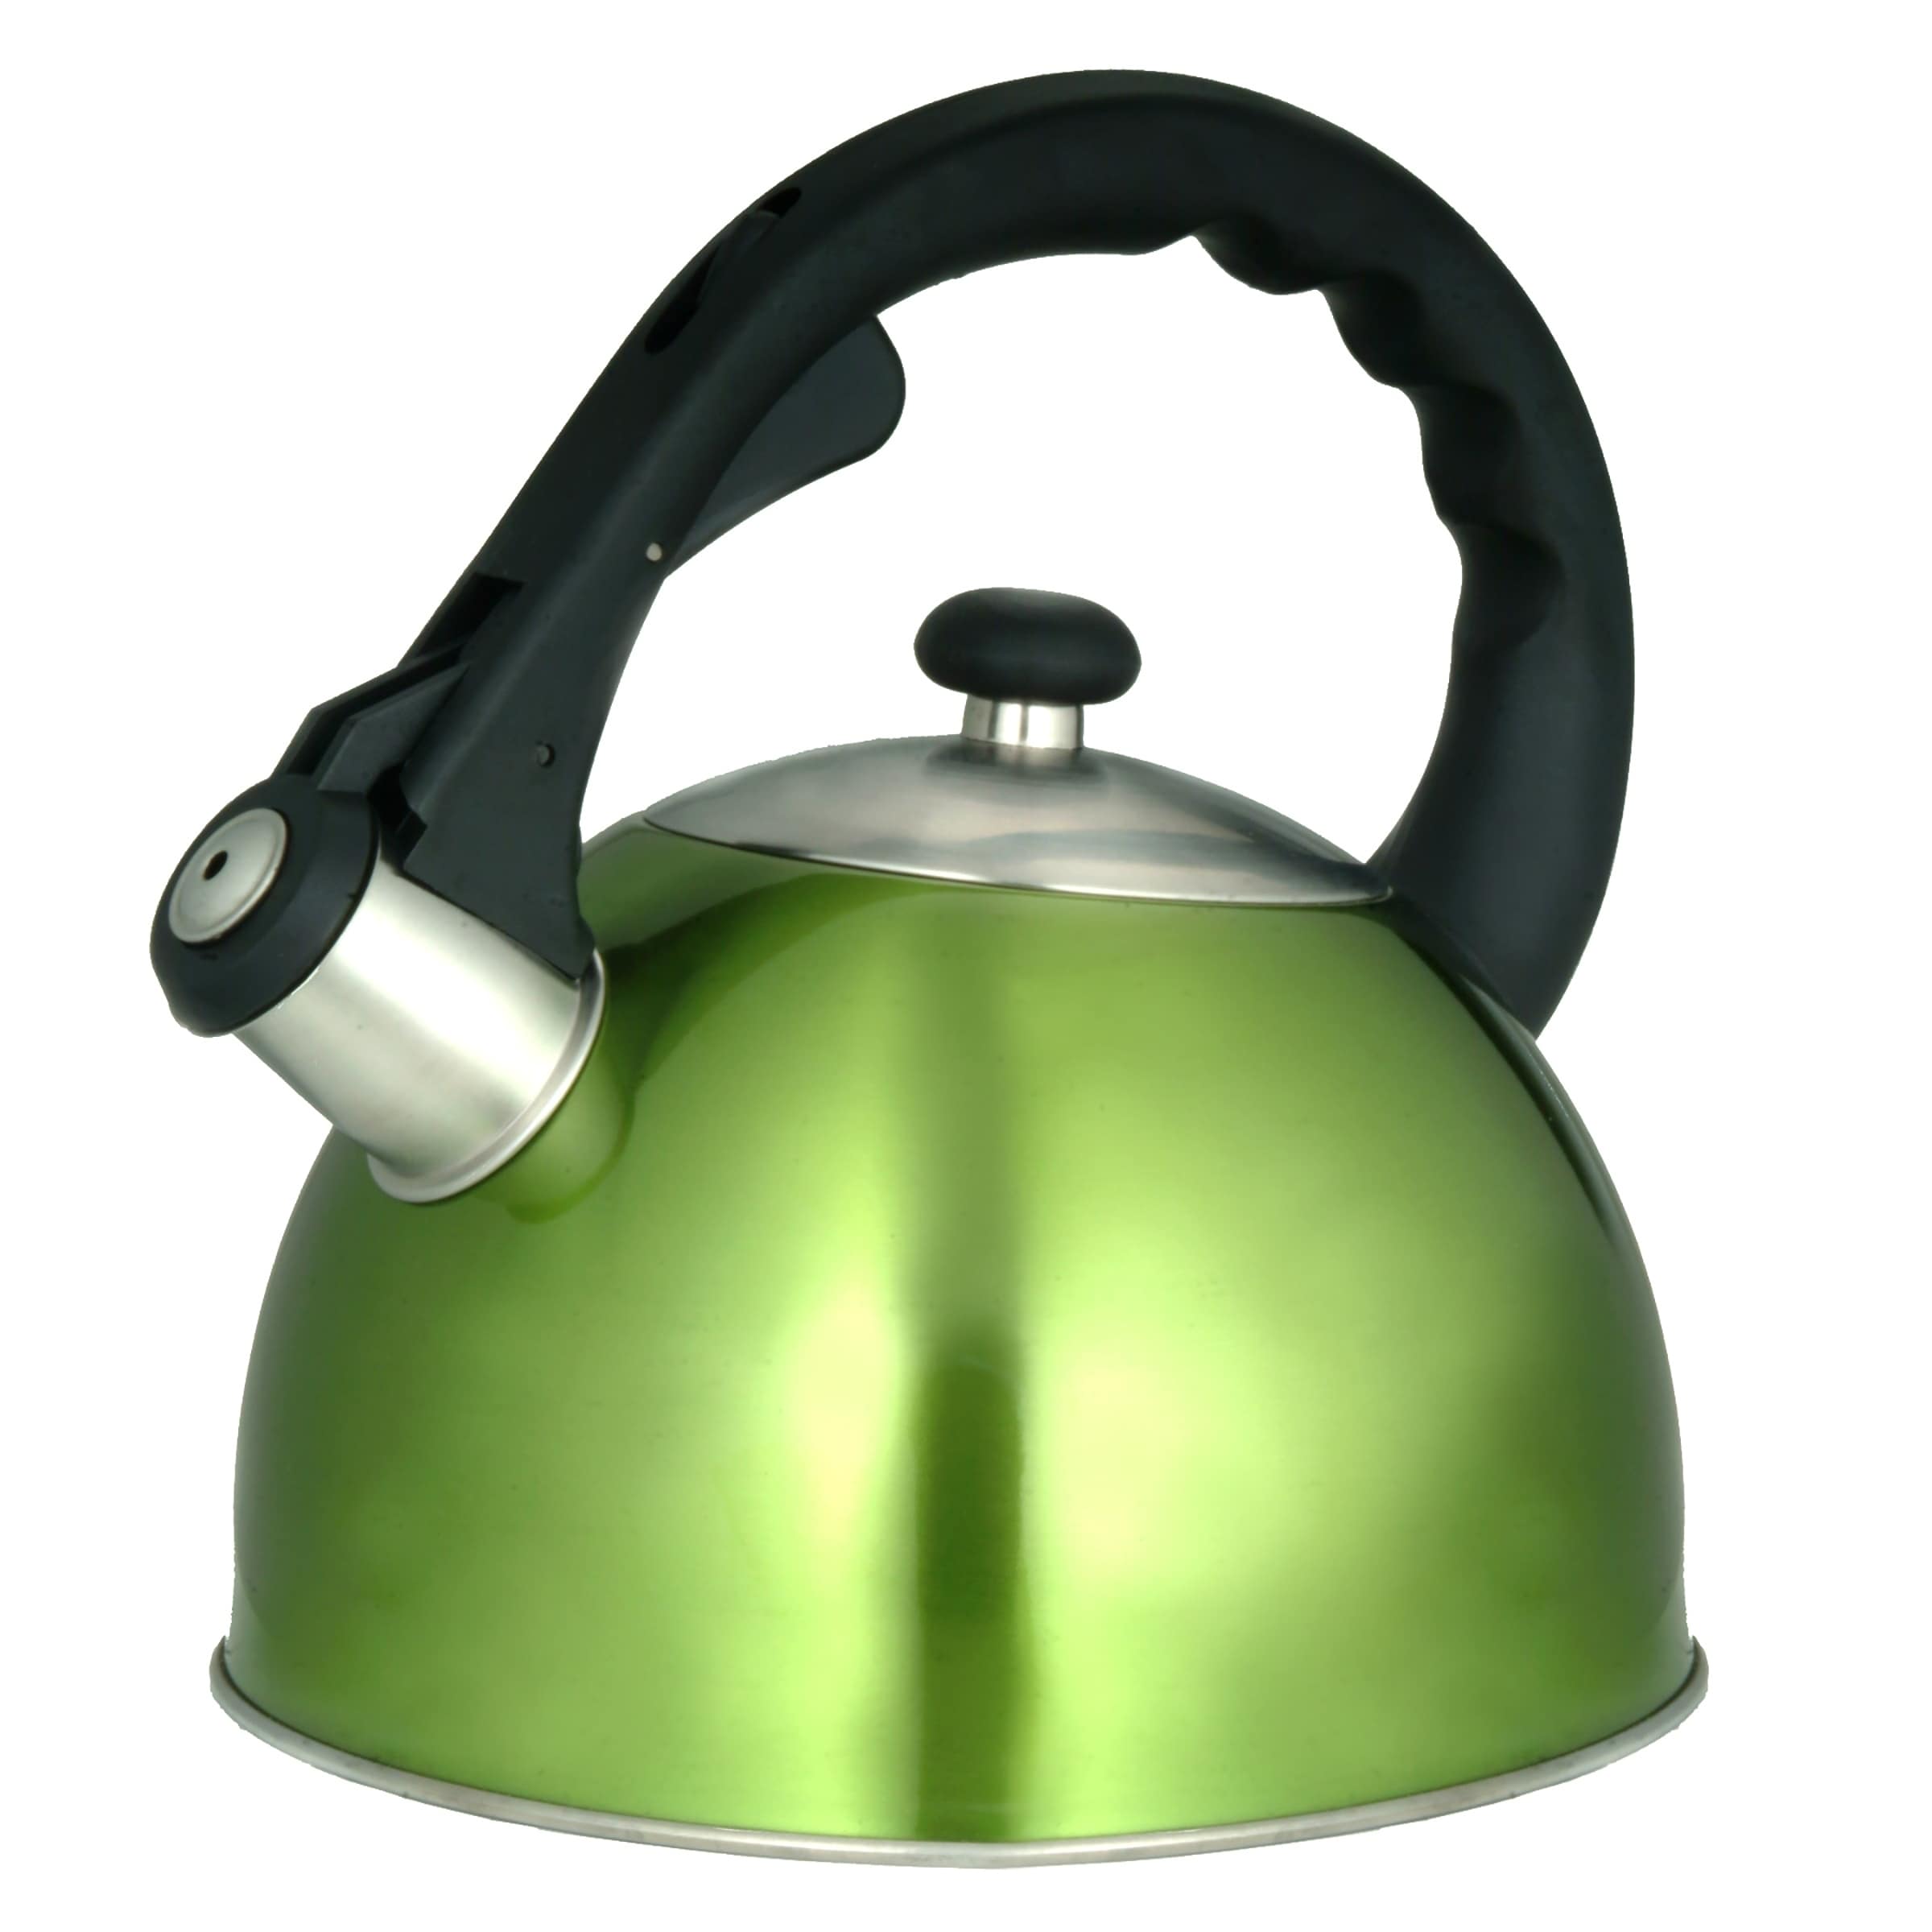 https://ak1.ostkcdn.com/images/products/10666502/Creative-Home-Satin-Splendor-2.8-Qt-Whistling-Stainless-Steel-Tea-Kettle-Metallic-Chartreuse-7b0e362e-c3fe-4b7d-8c50-54a0405b0105.jpg